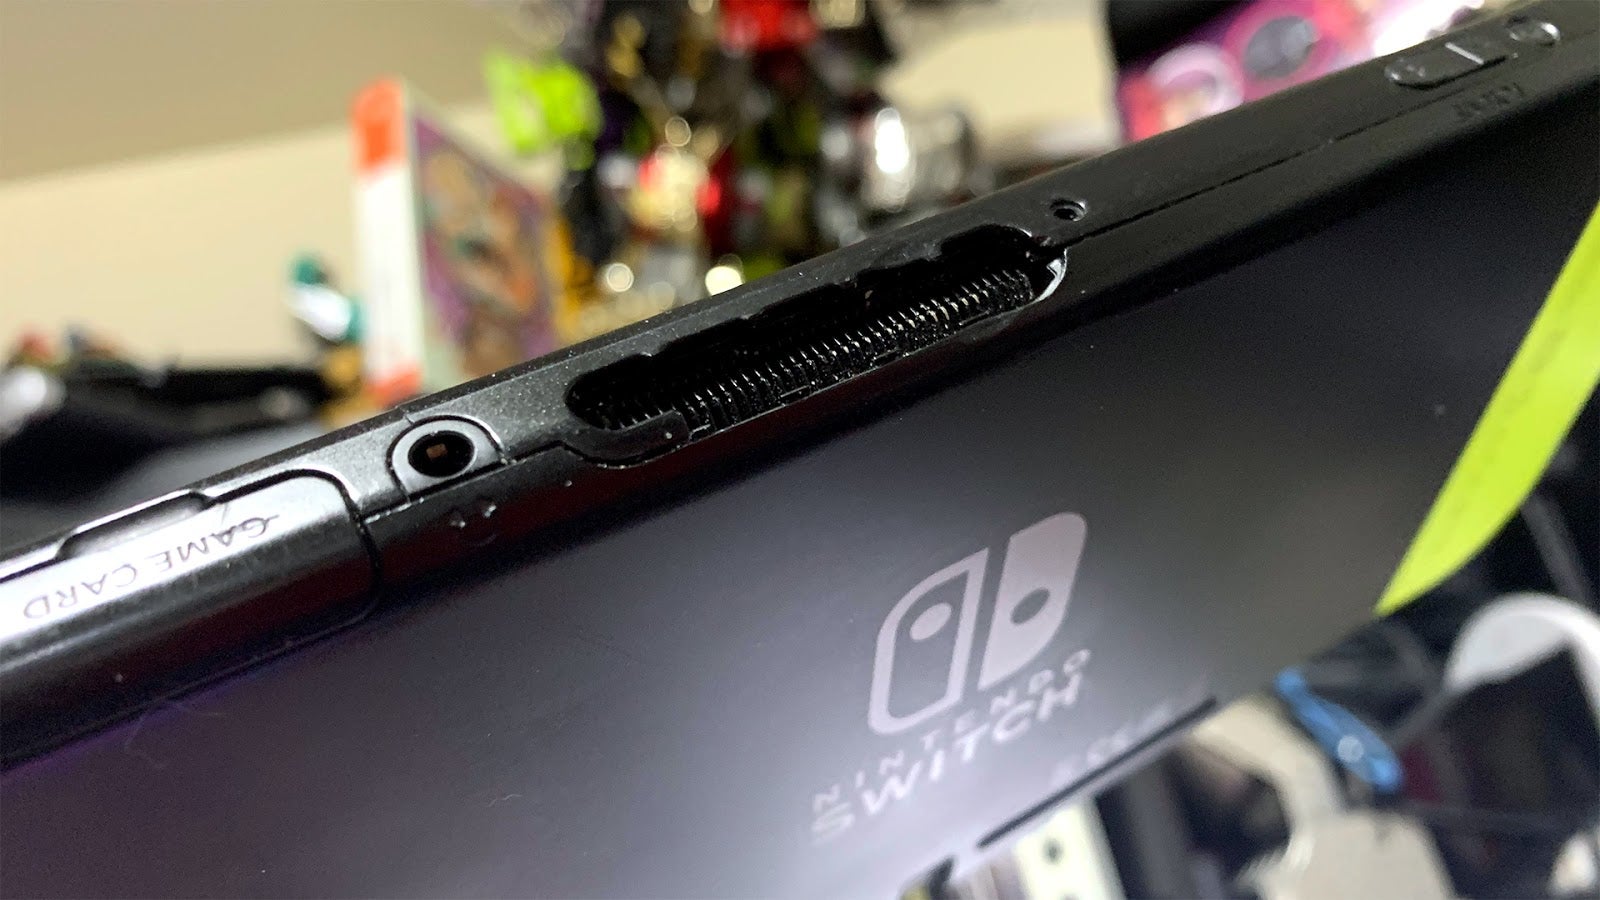 Should I Replace My Damaged Nintendo Switch?